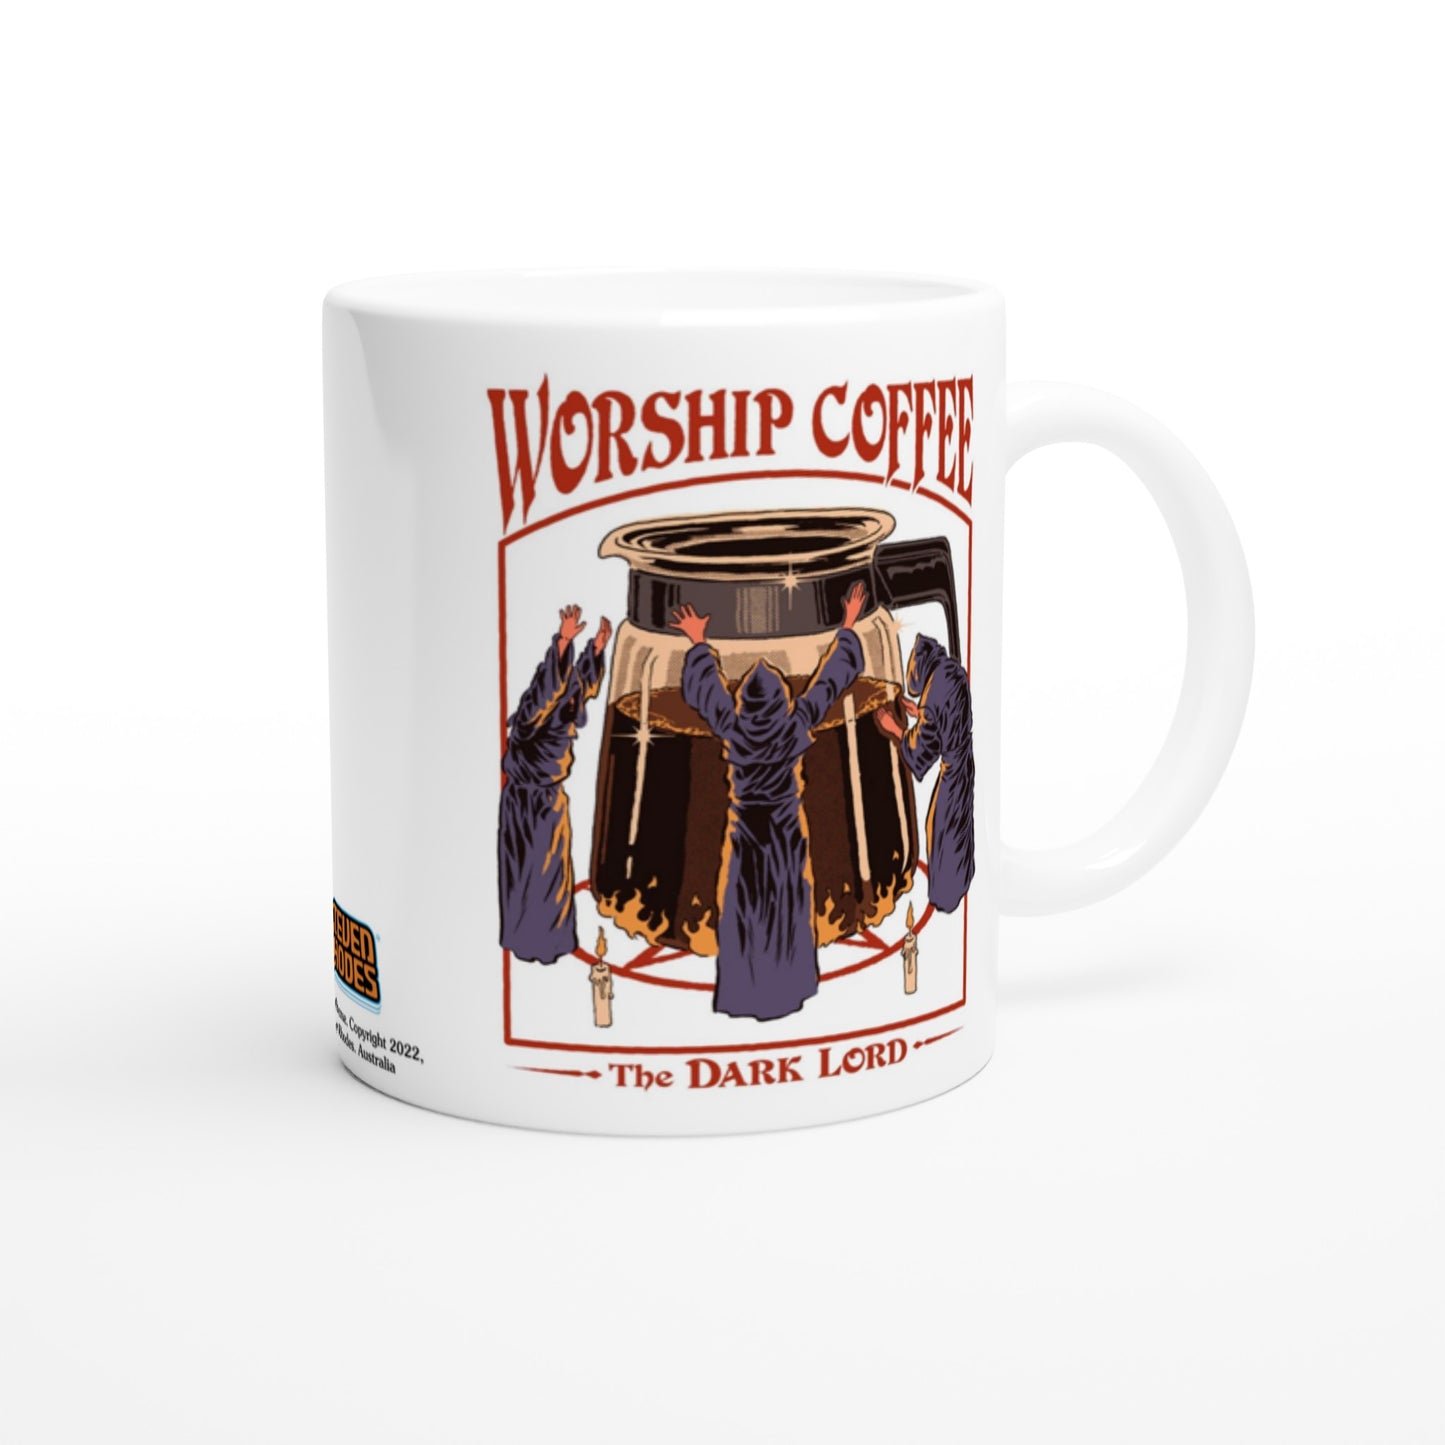 Official Steven Rhodes Mug - Worship Coffee - 330ml White Mug